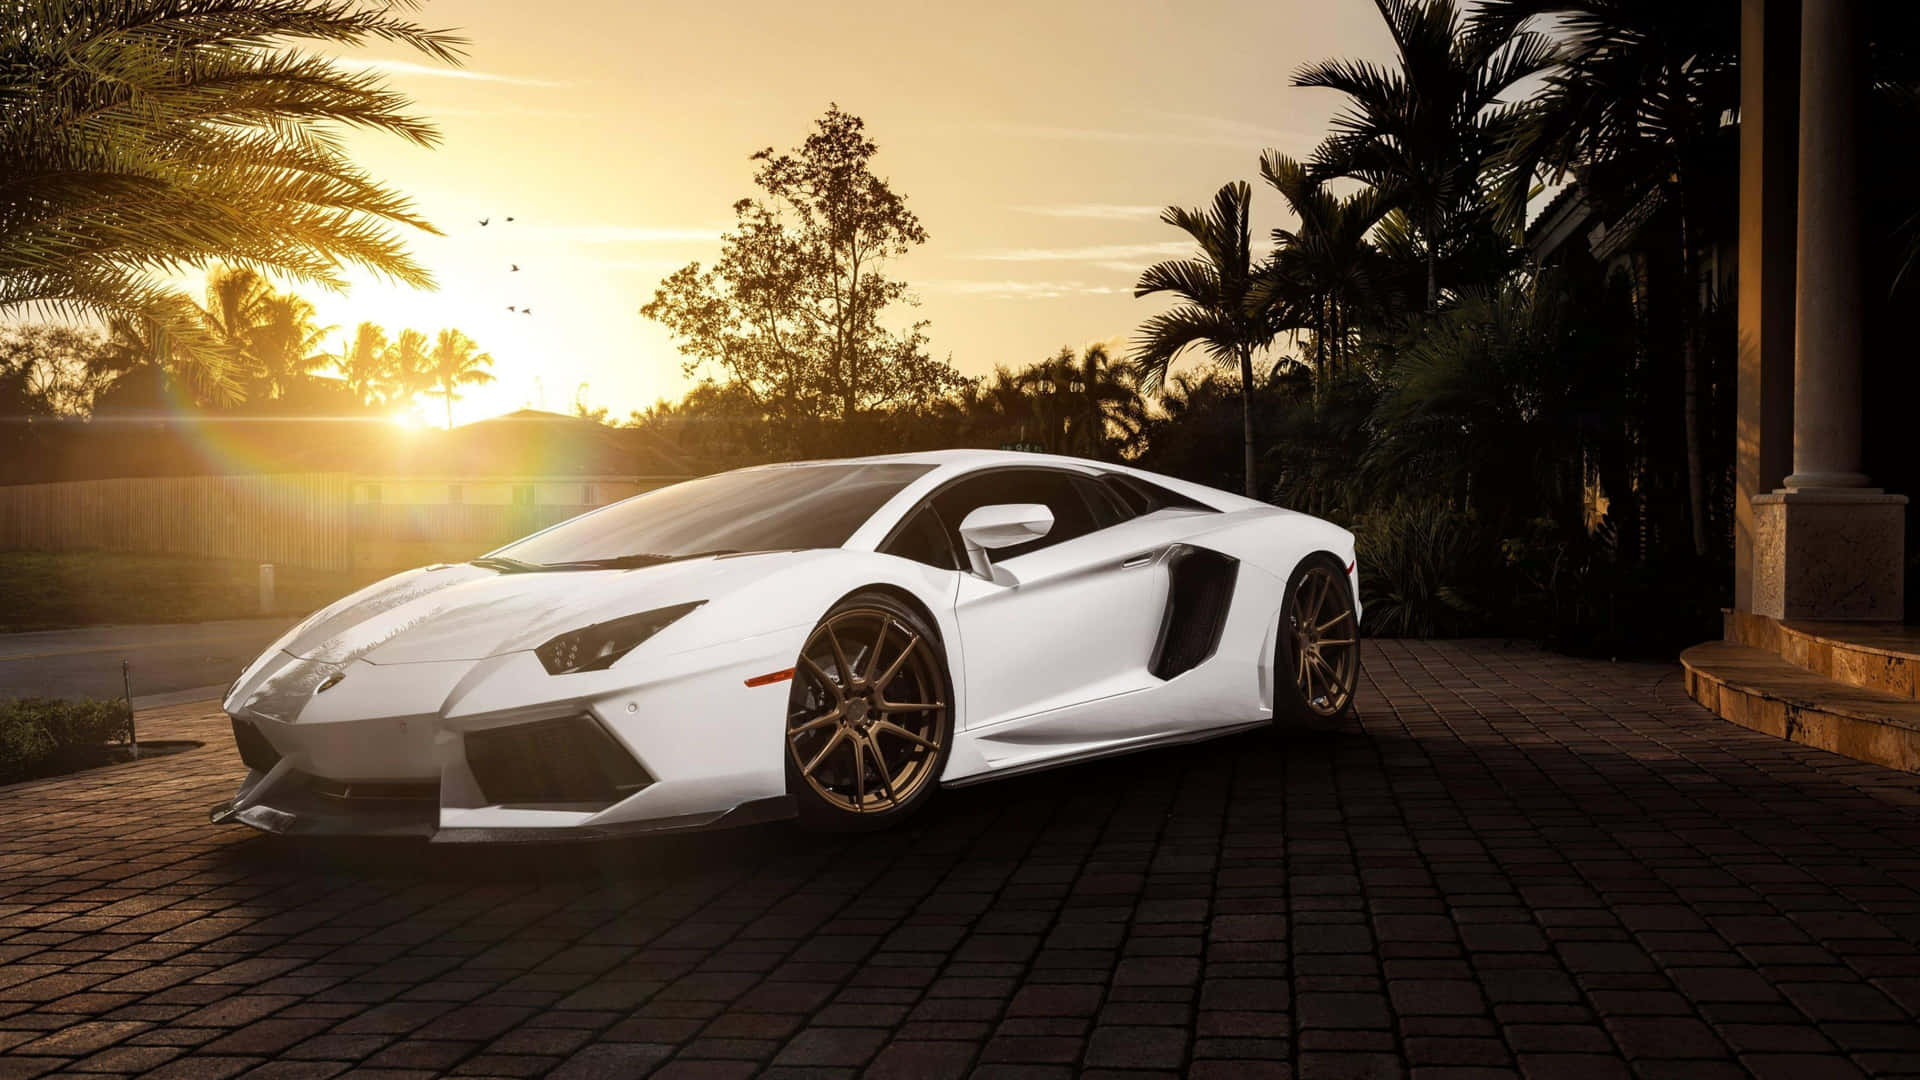 Luxury Italian Automobile Manufacturer Lamborghini's Stunning 4K Supercar